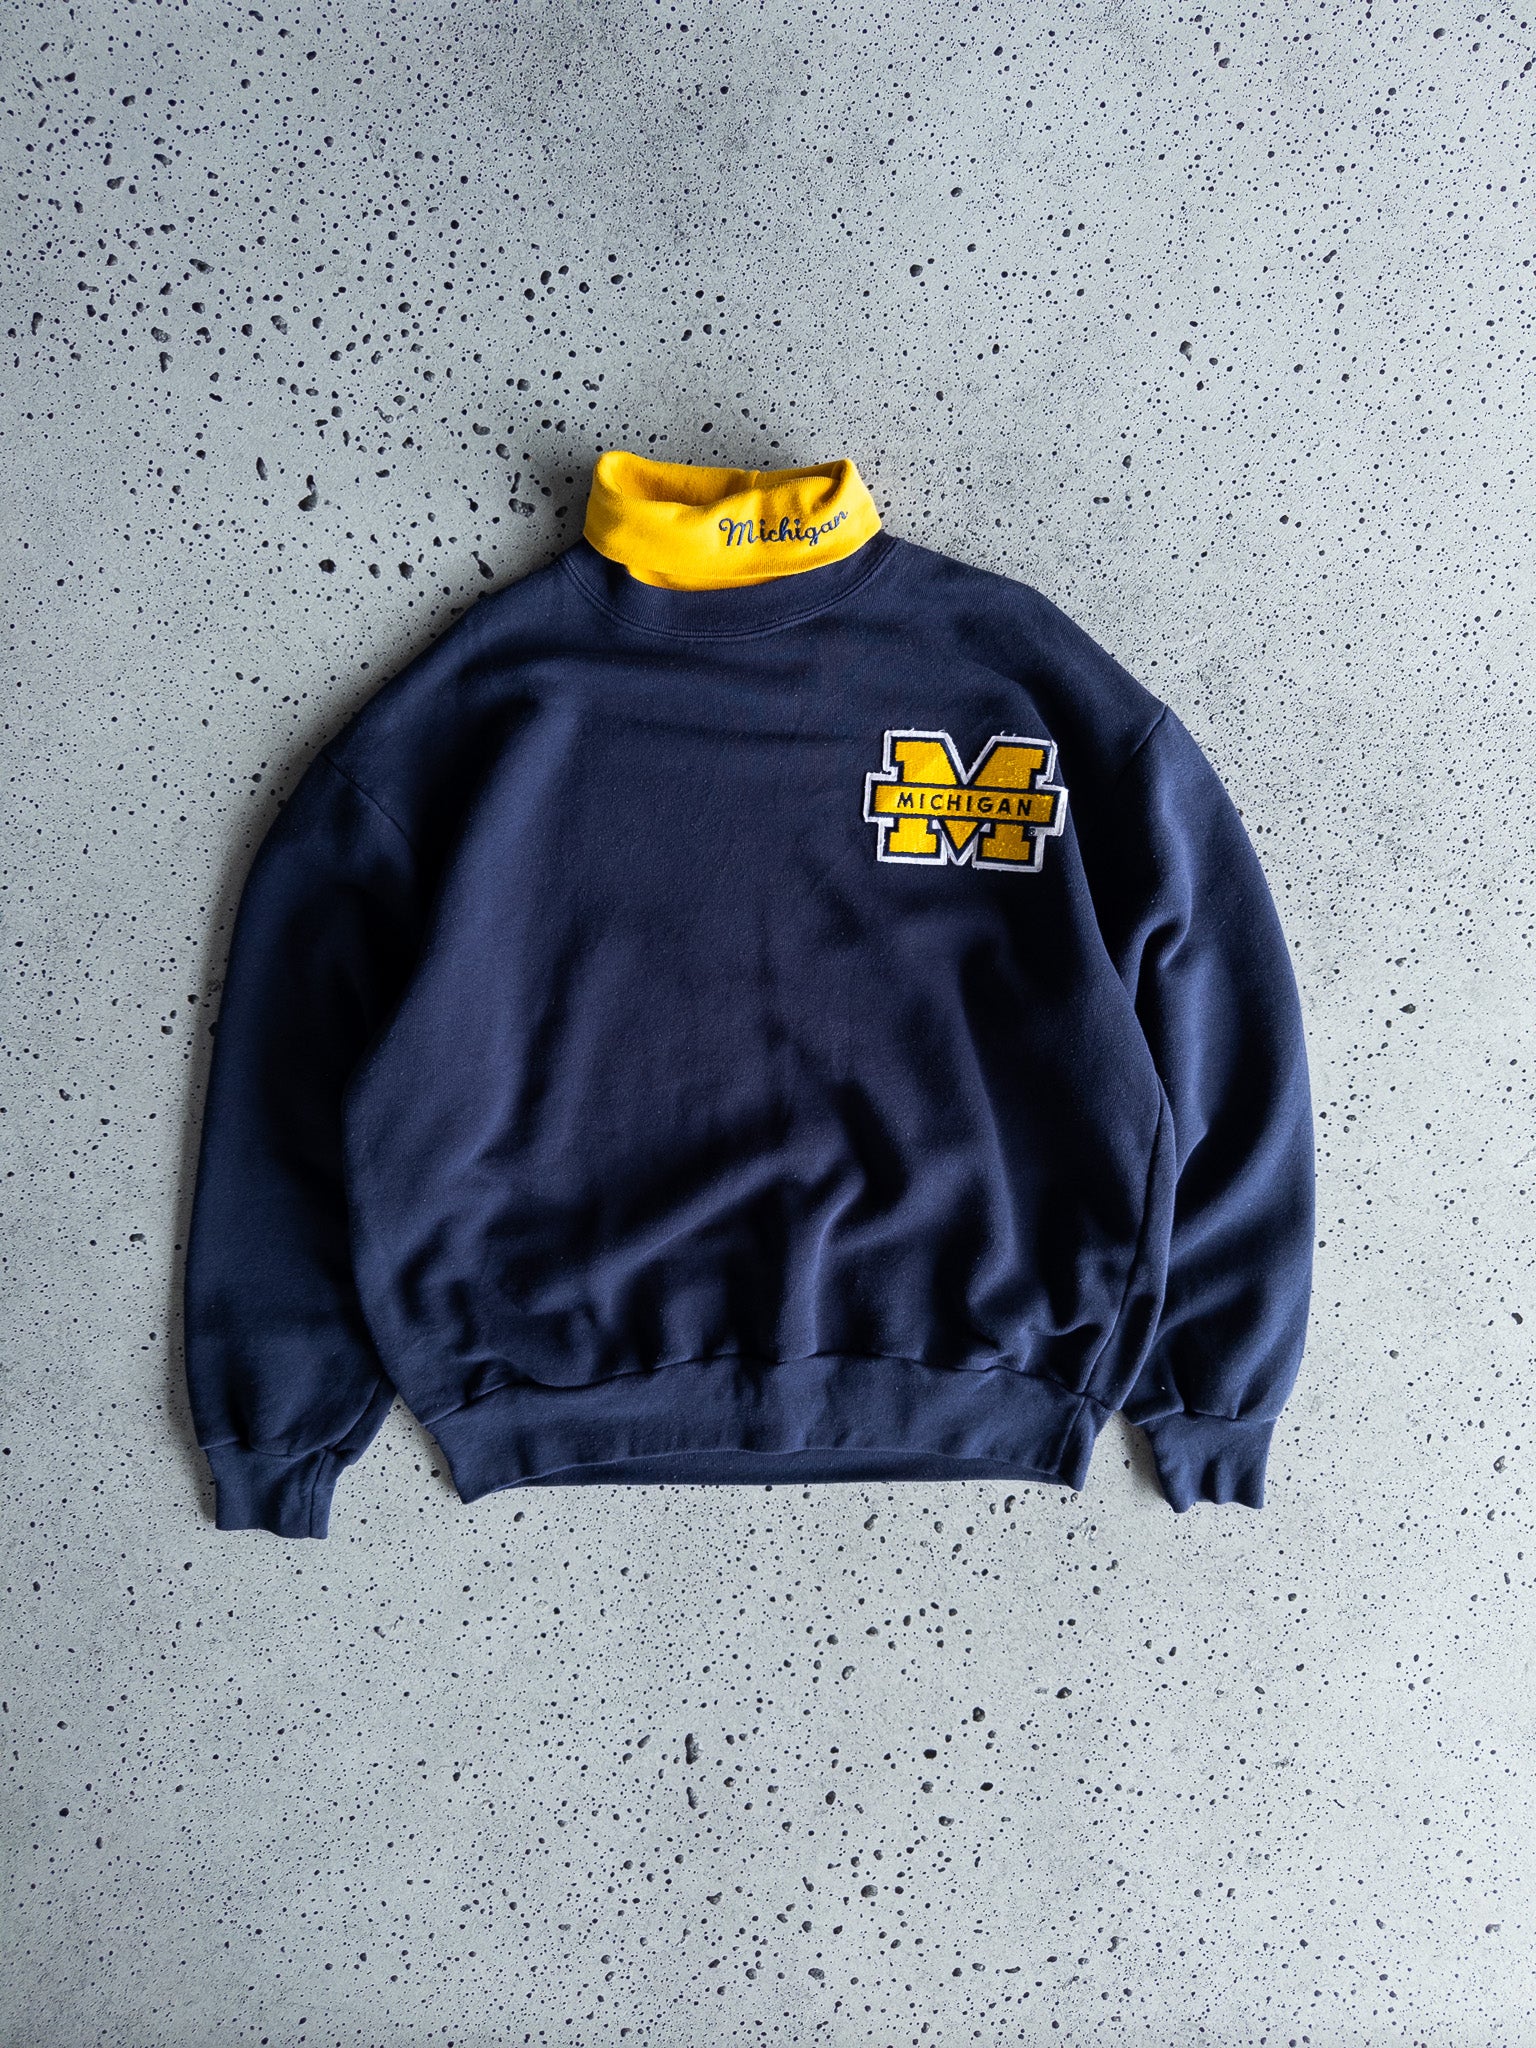 Vintage University of Michigan Turtleneck Sweatshirt (L)